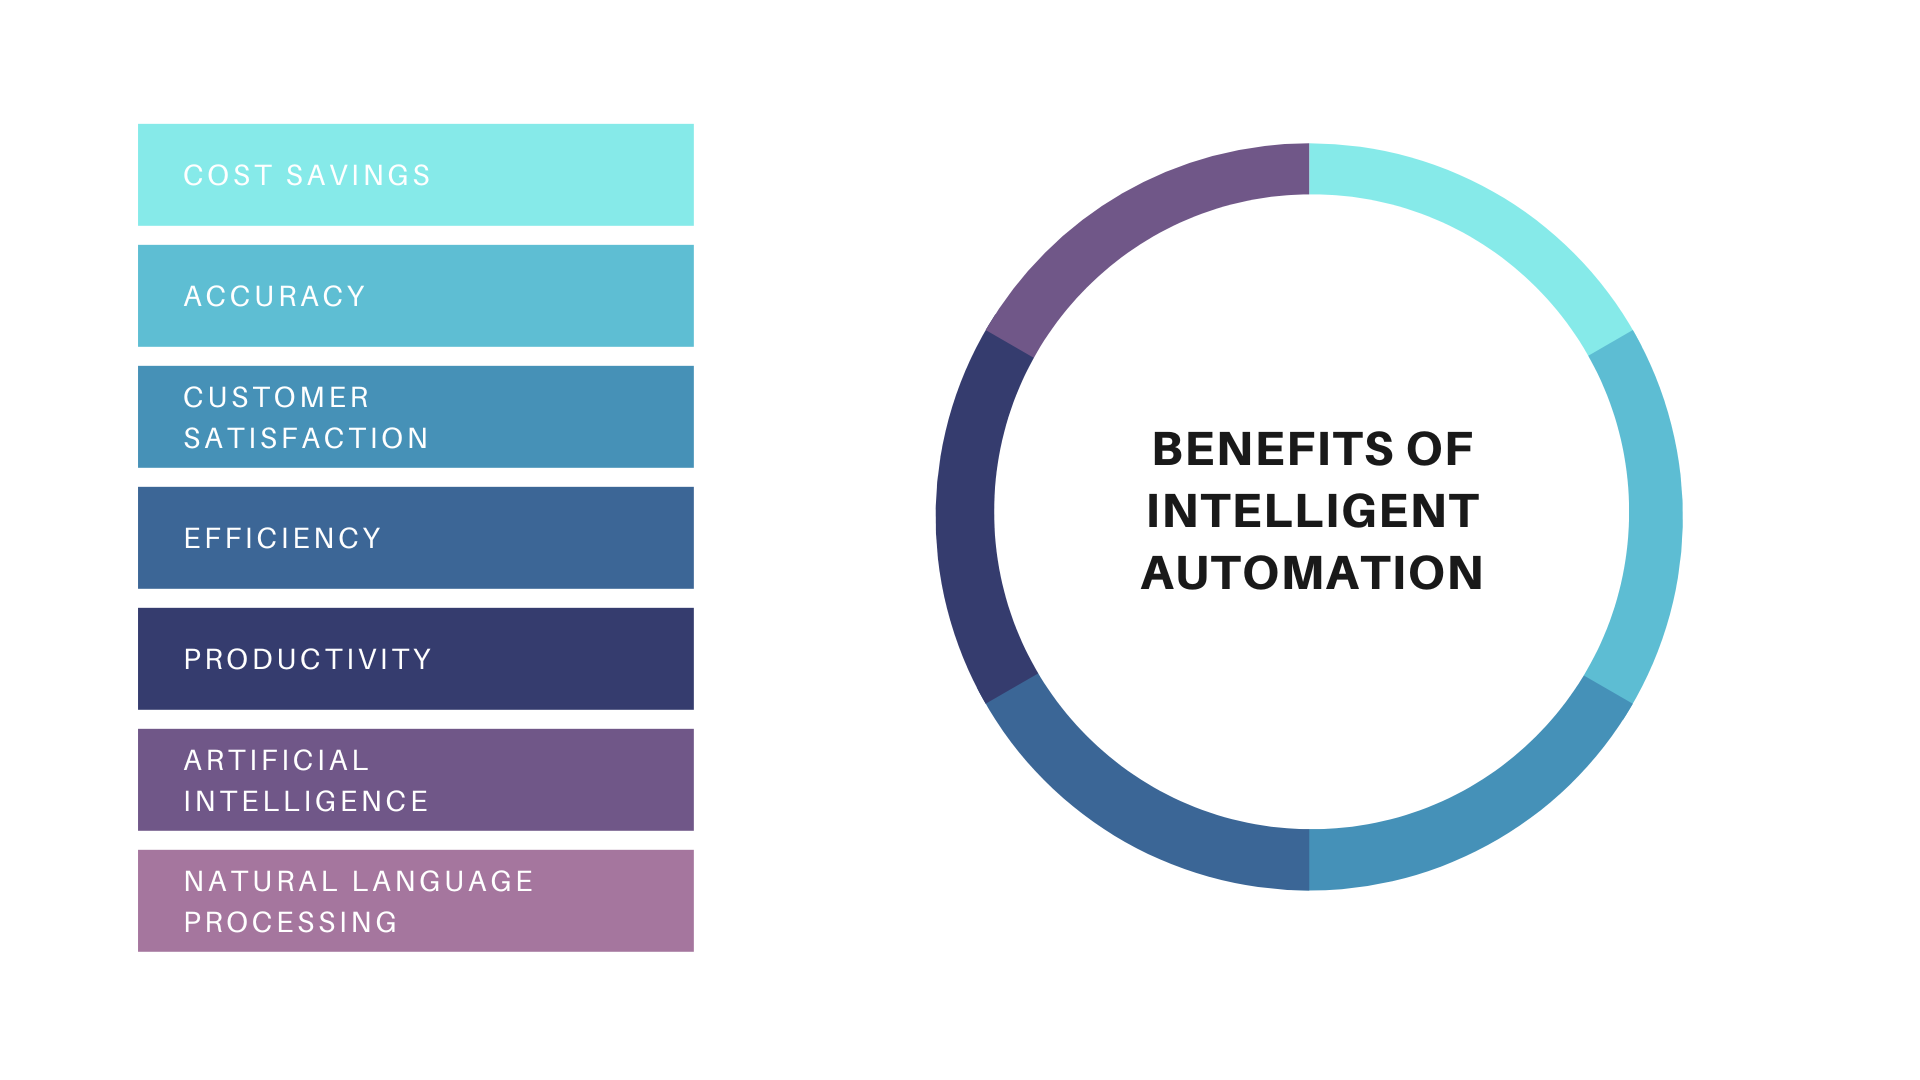 benefits of intelligent automation pie chart